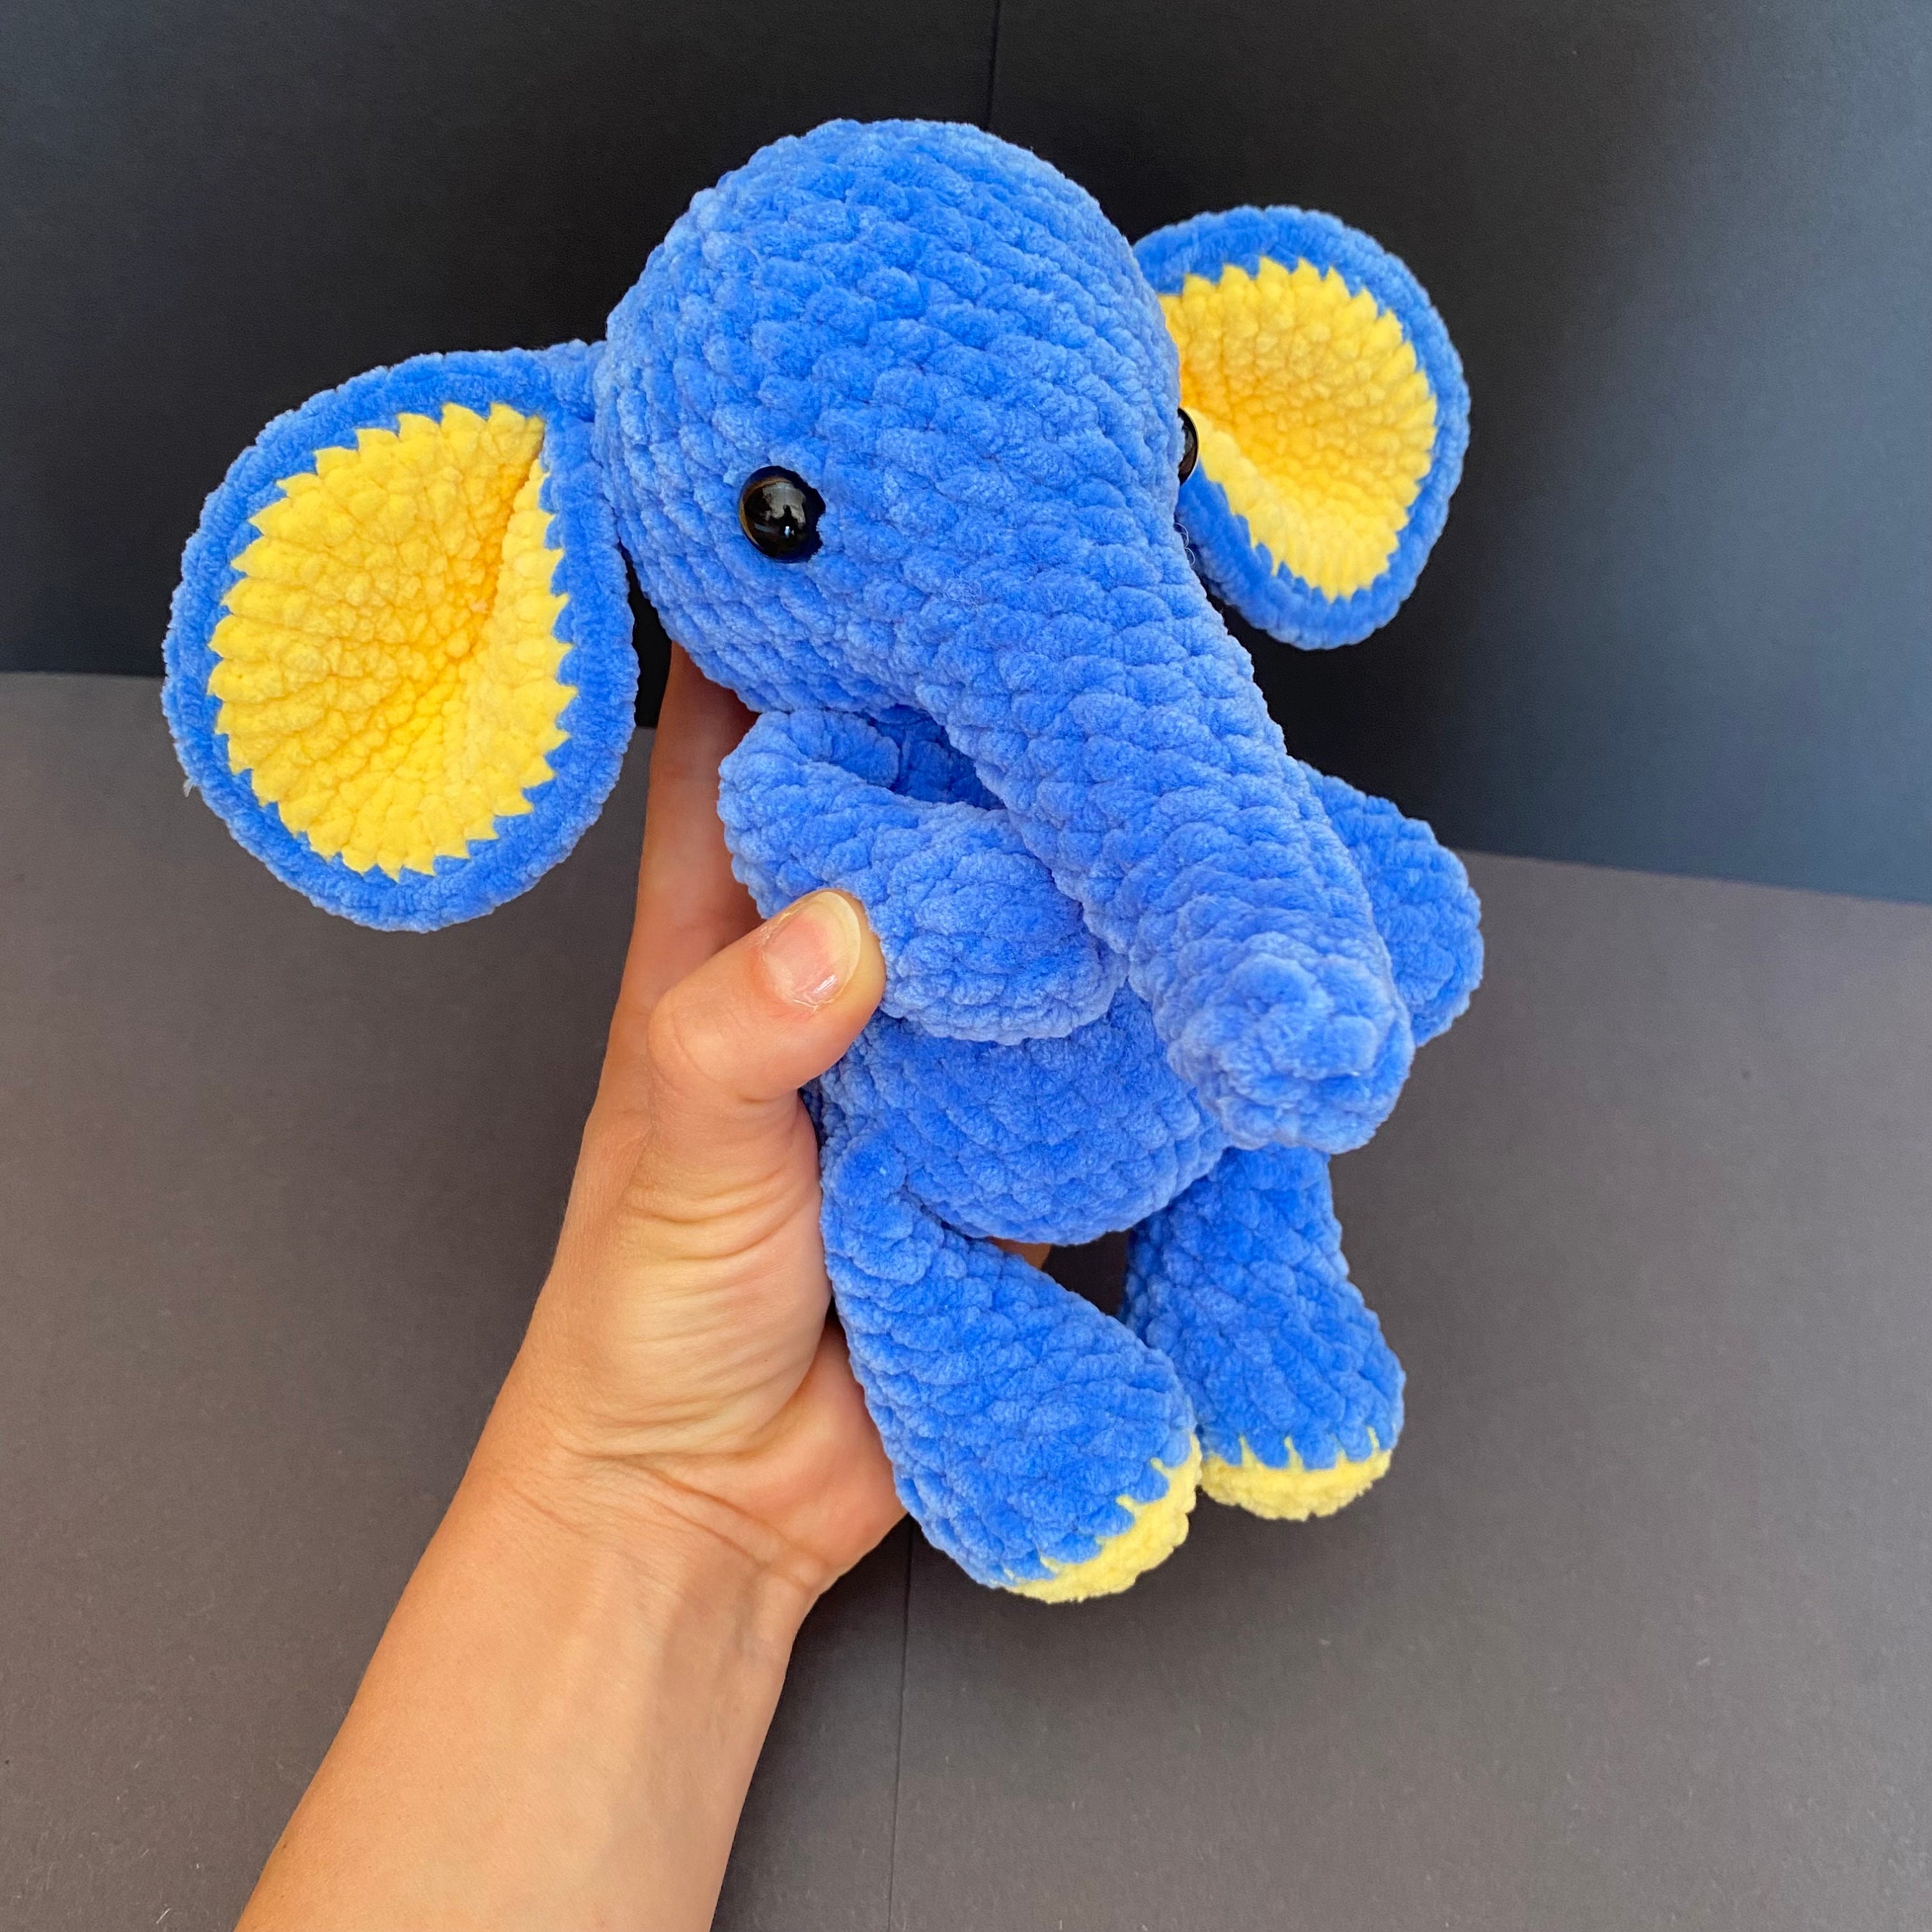 CUSTOM CROCHET PLUSHIES – The Blue Elephants